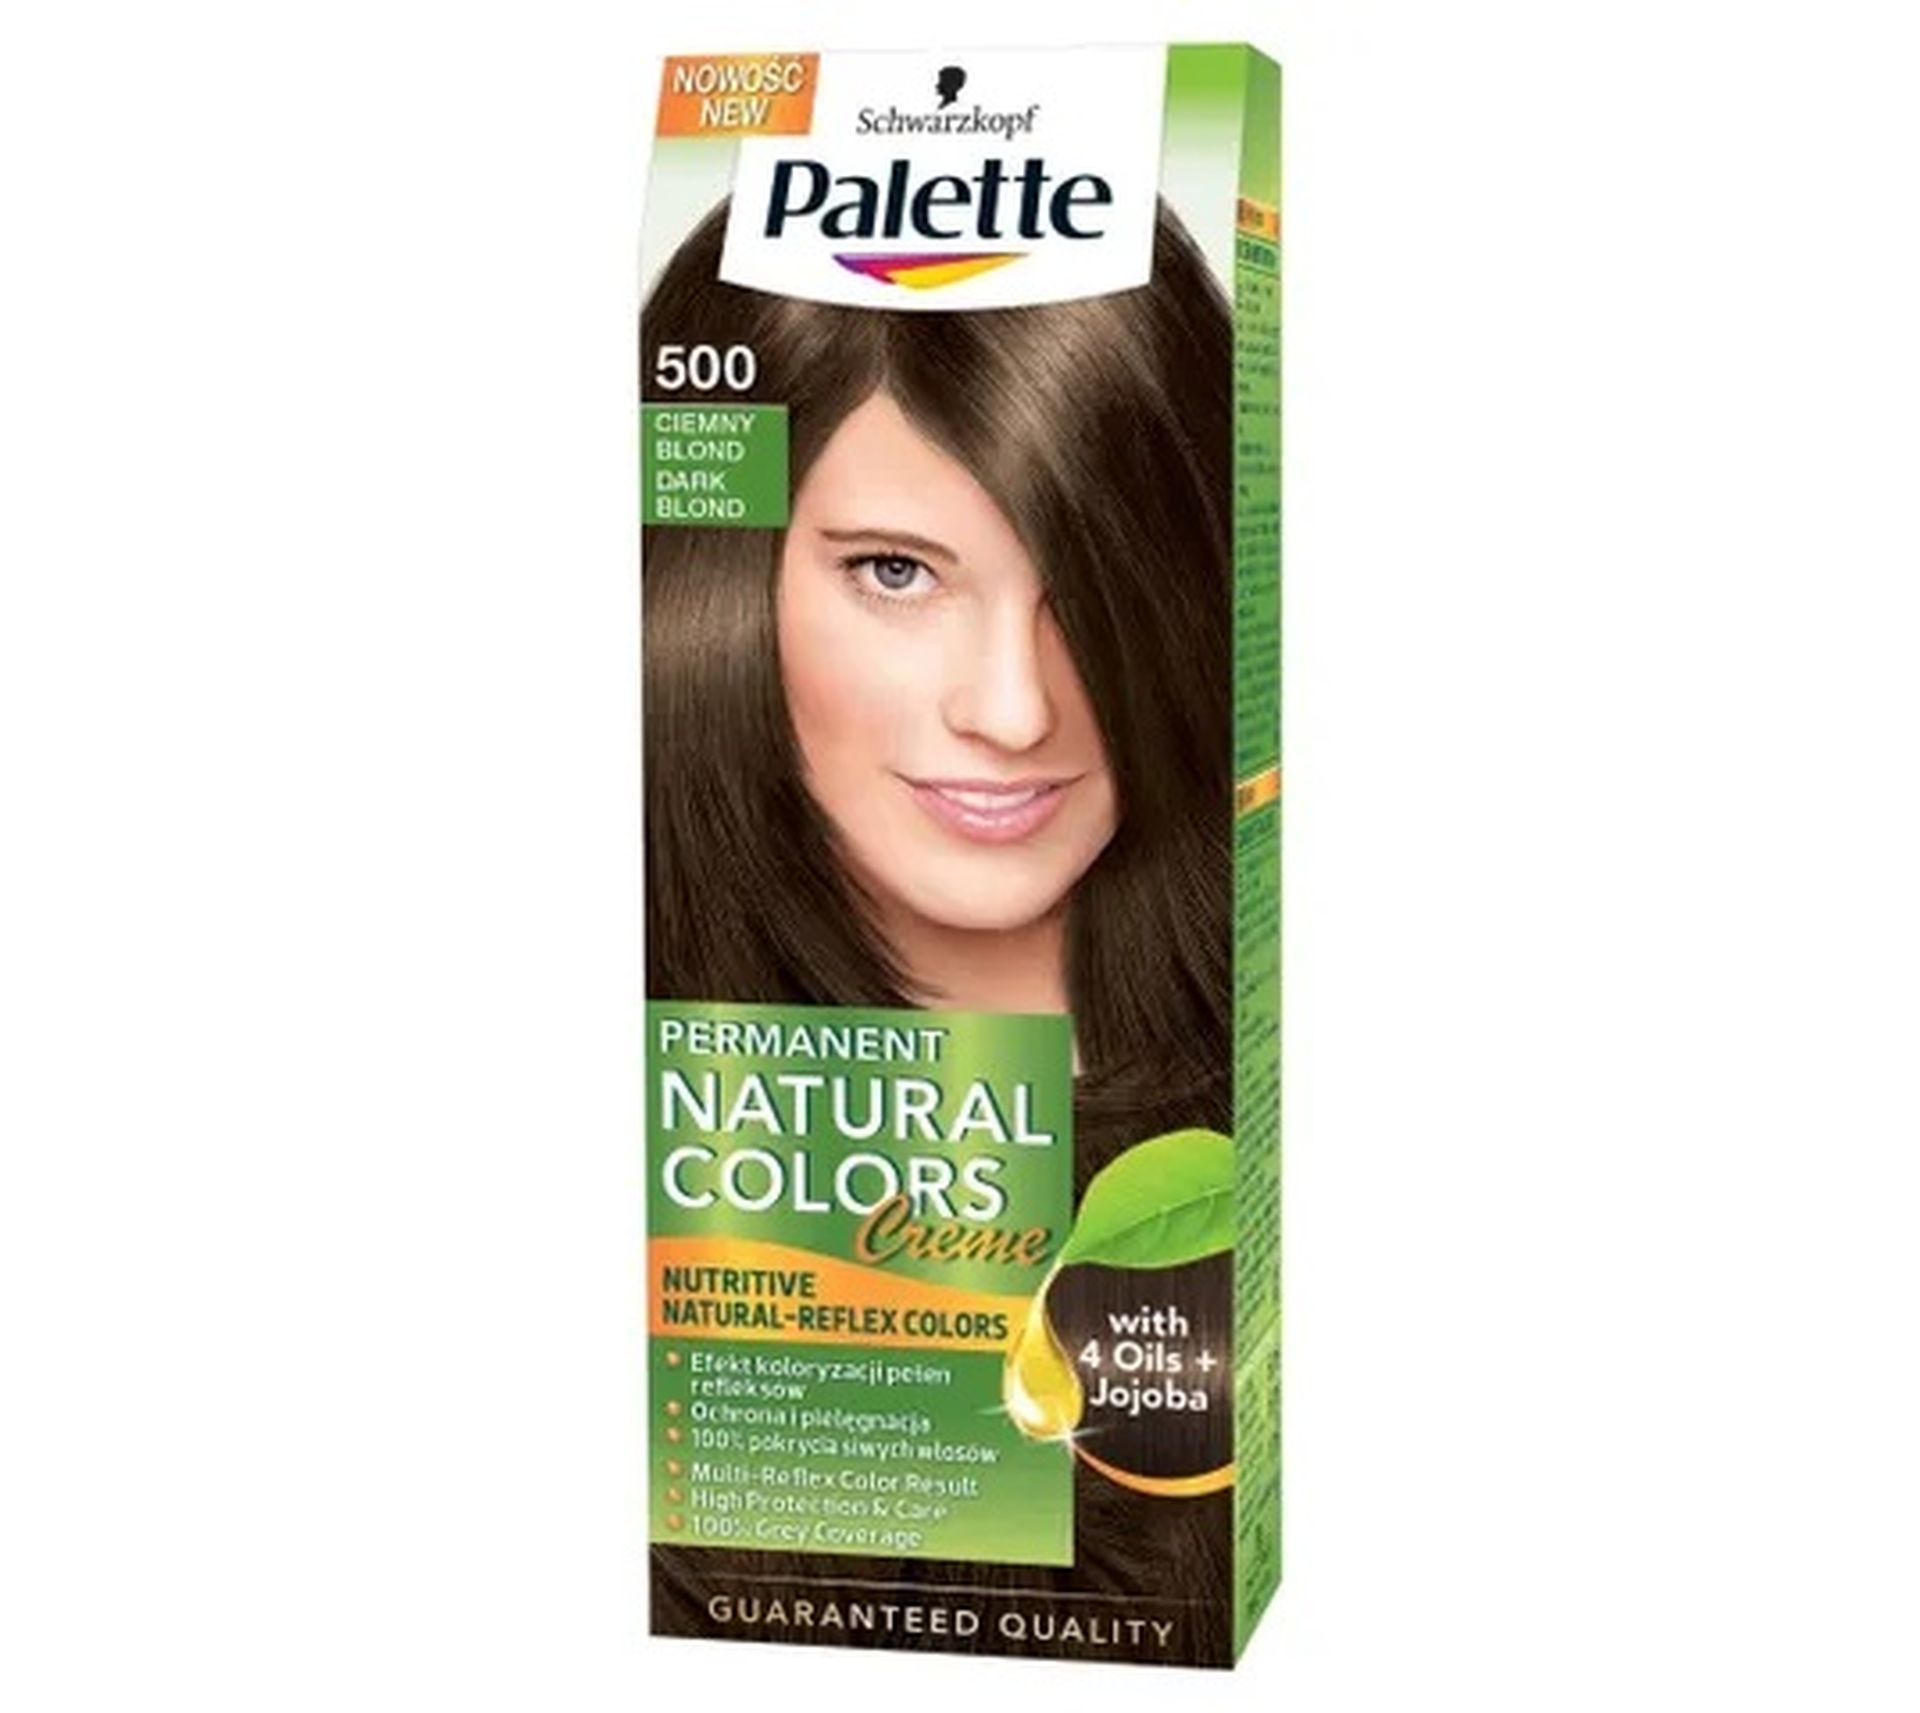 Palette Permanent Natural Colors krem do włosów koloryzujący ciemny blond nr 500 (50 ml)